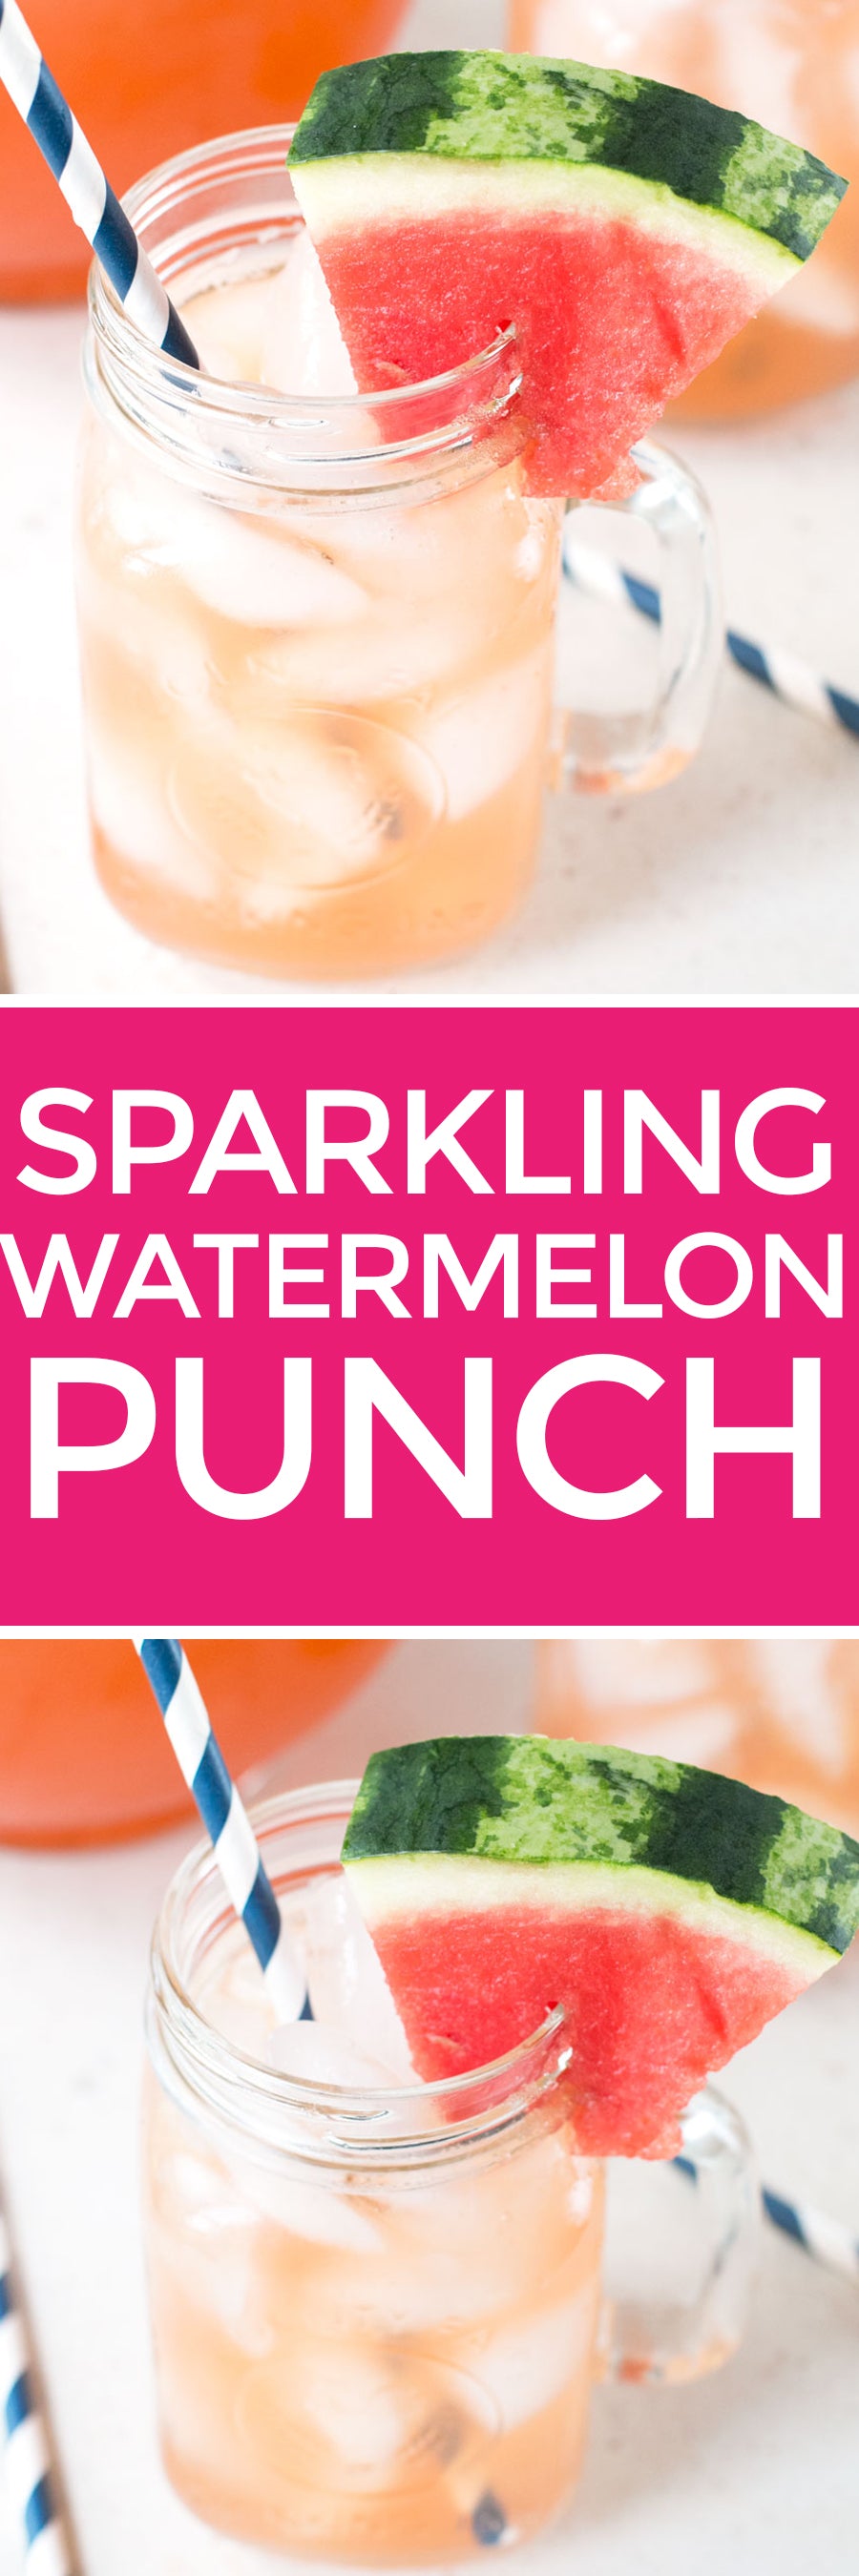 Sparkling Watermelon Punch | pigofthemonth.com #cocktail #libation #summer